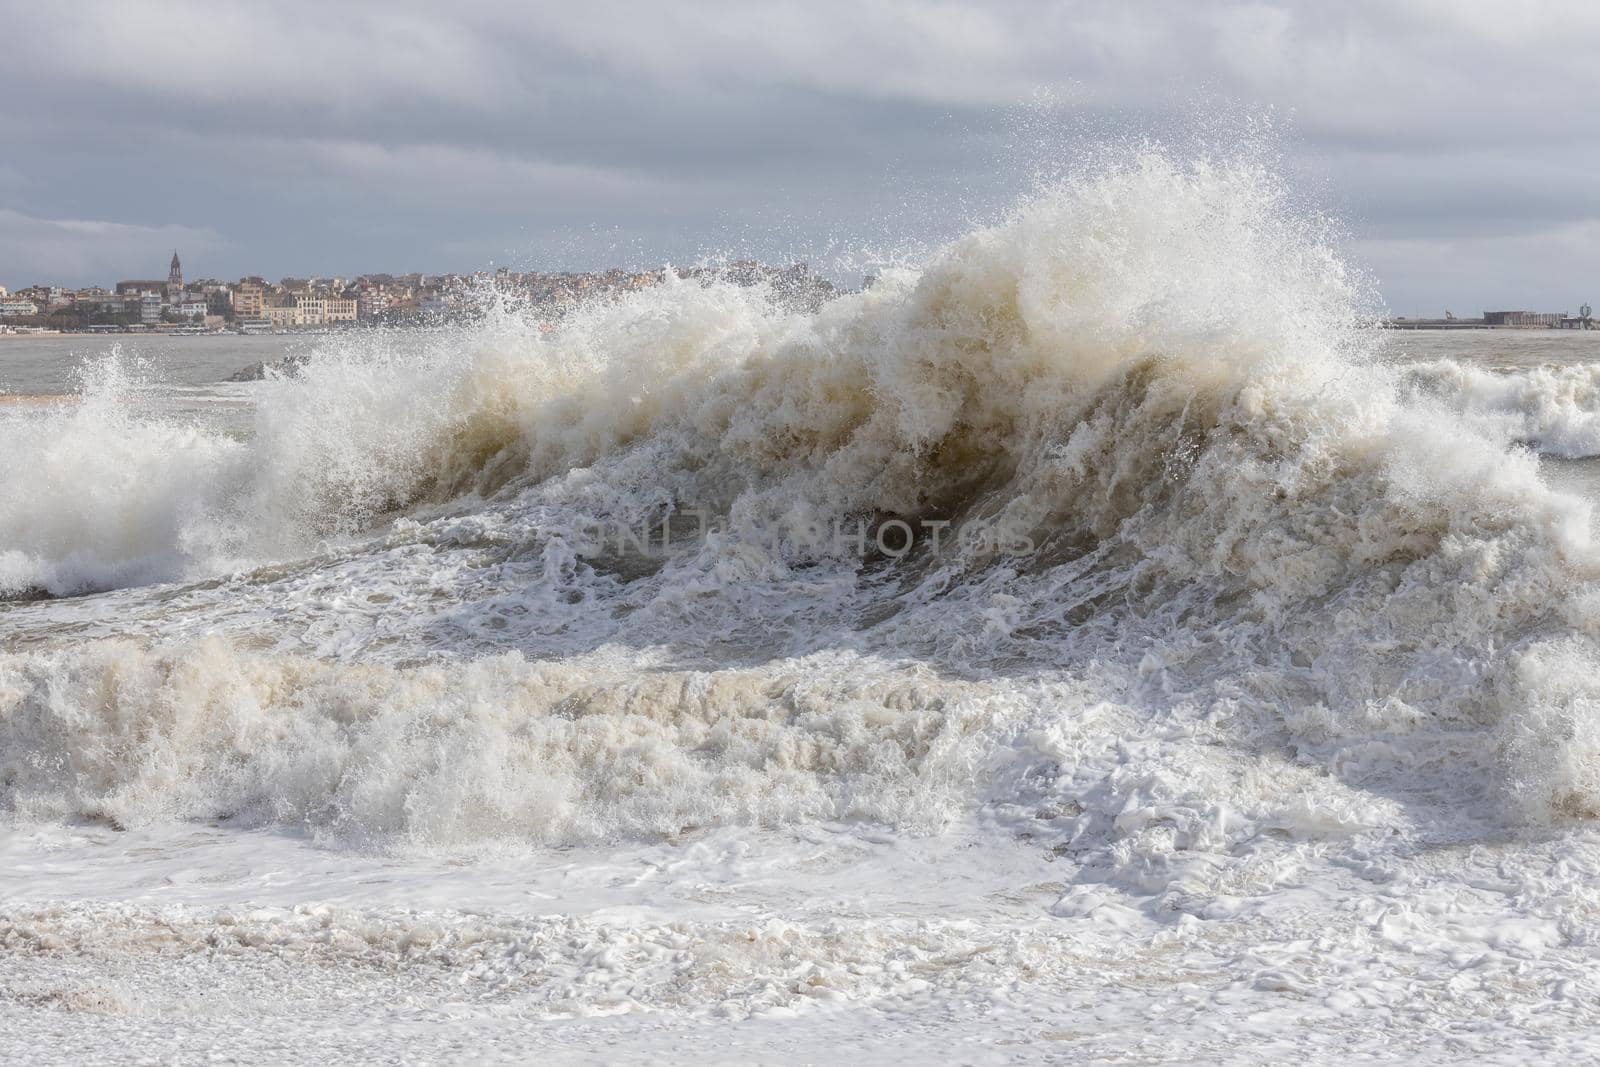 Powerful ocean wave breaking ina windy day by Digoarpi